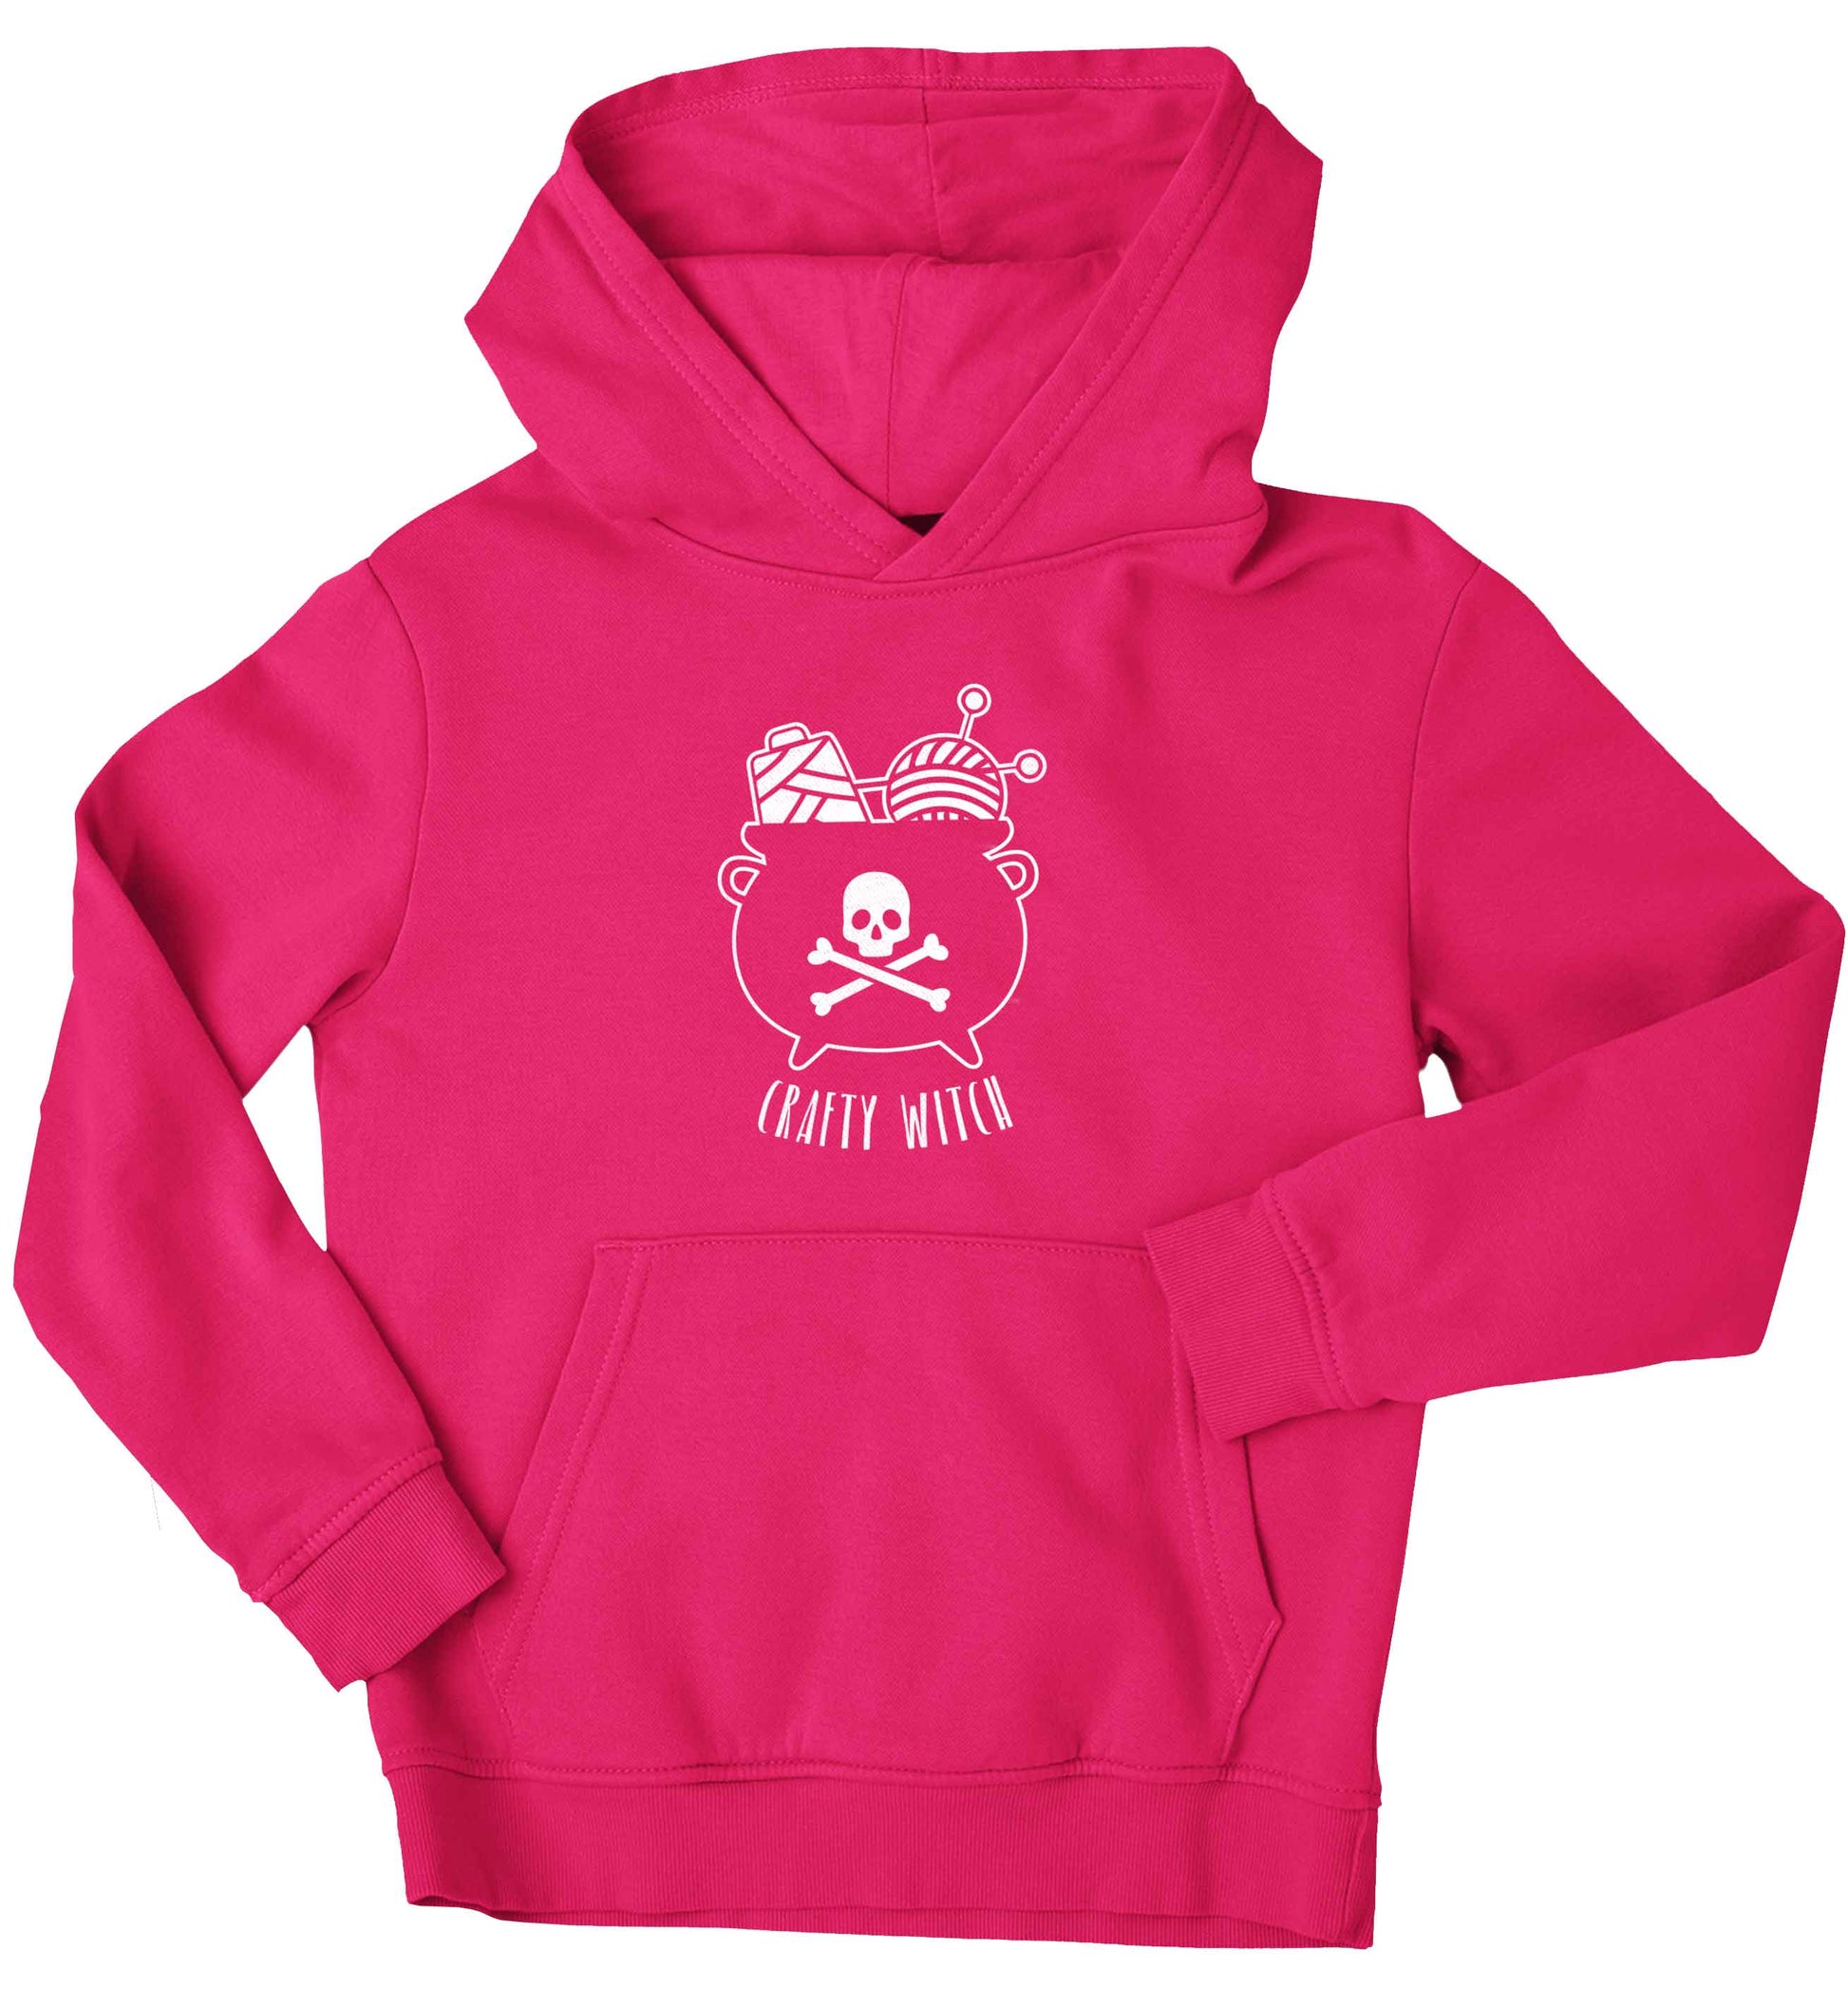 Crafty witch children's pink hoodie 12-13 Years